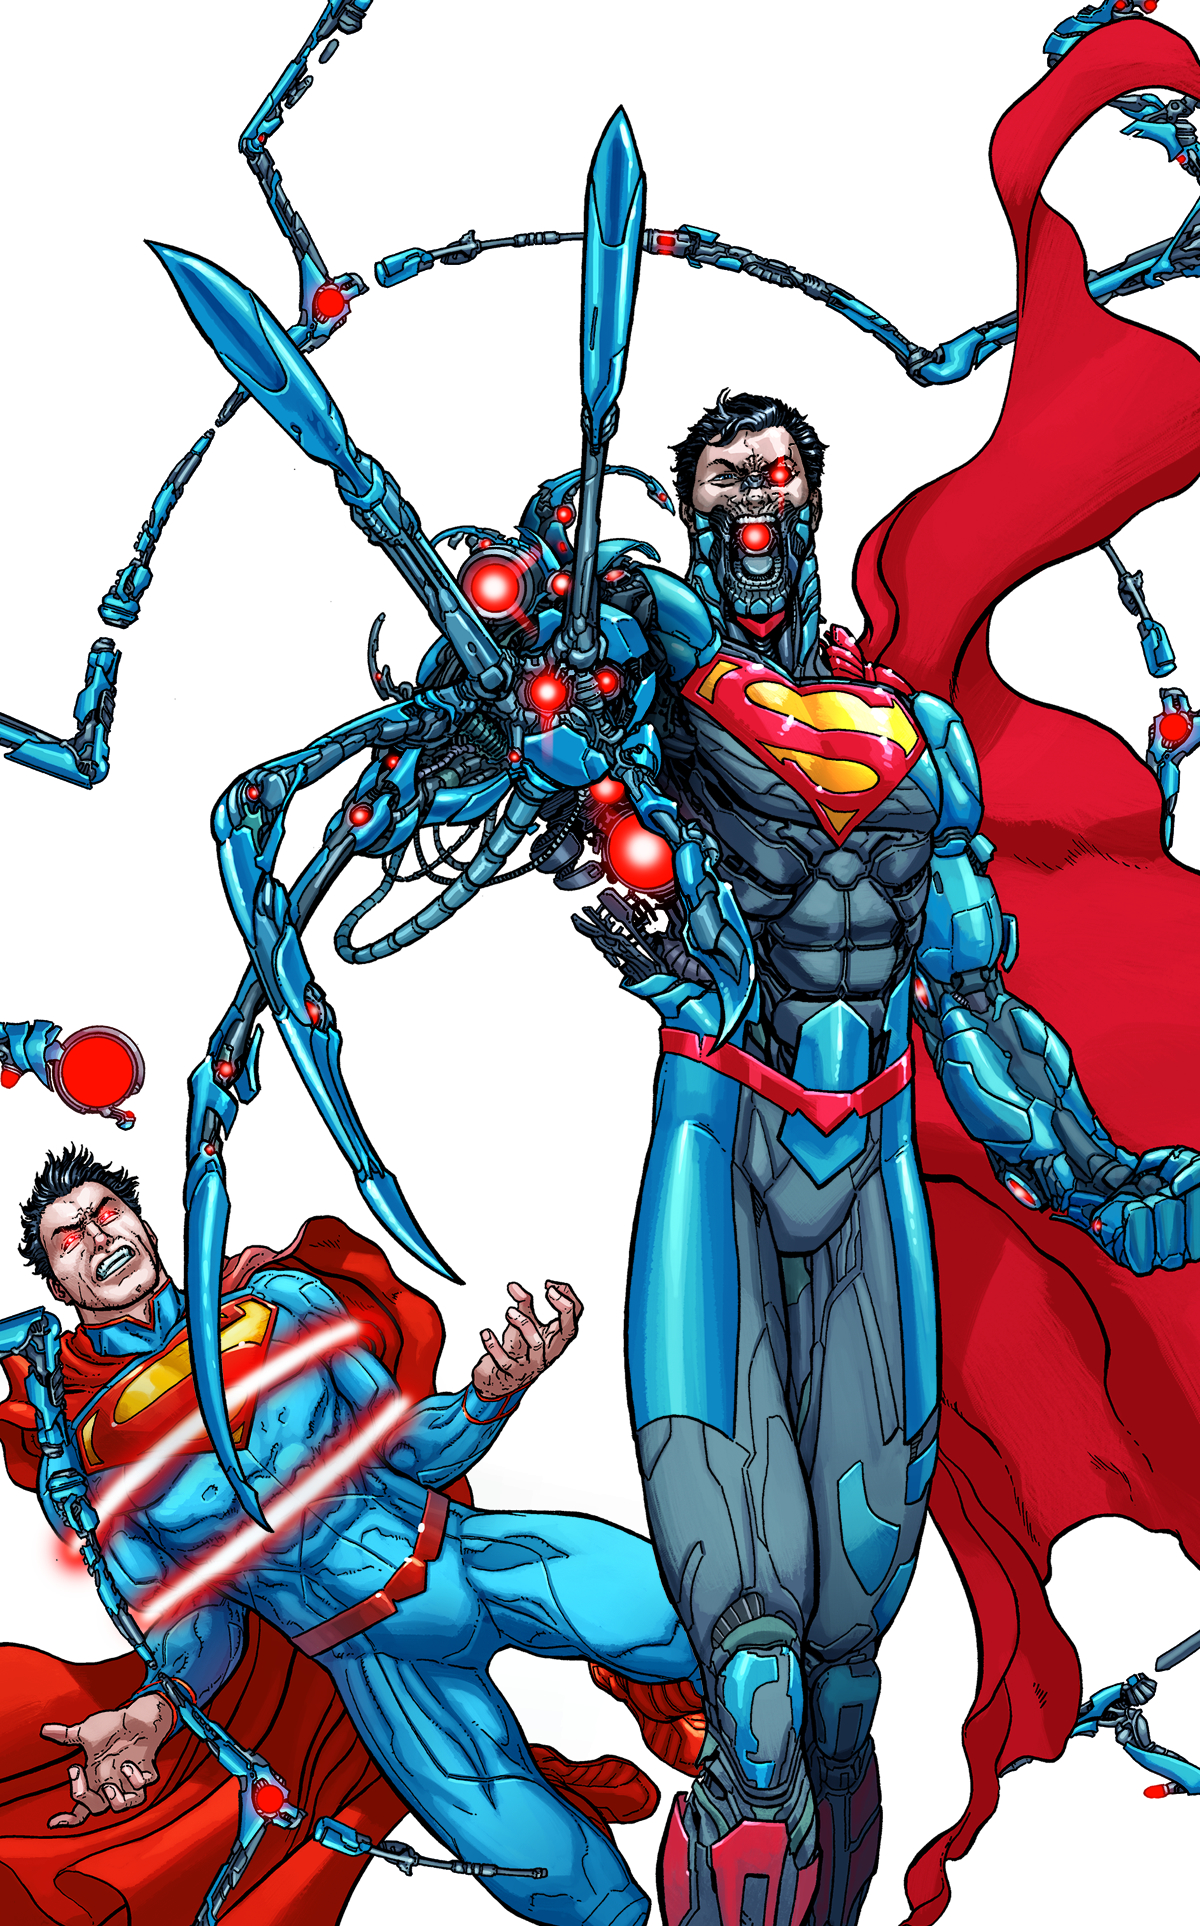 ACTION COMICS #23.1 CYBORG SUPERMAN